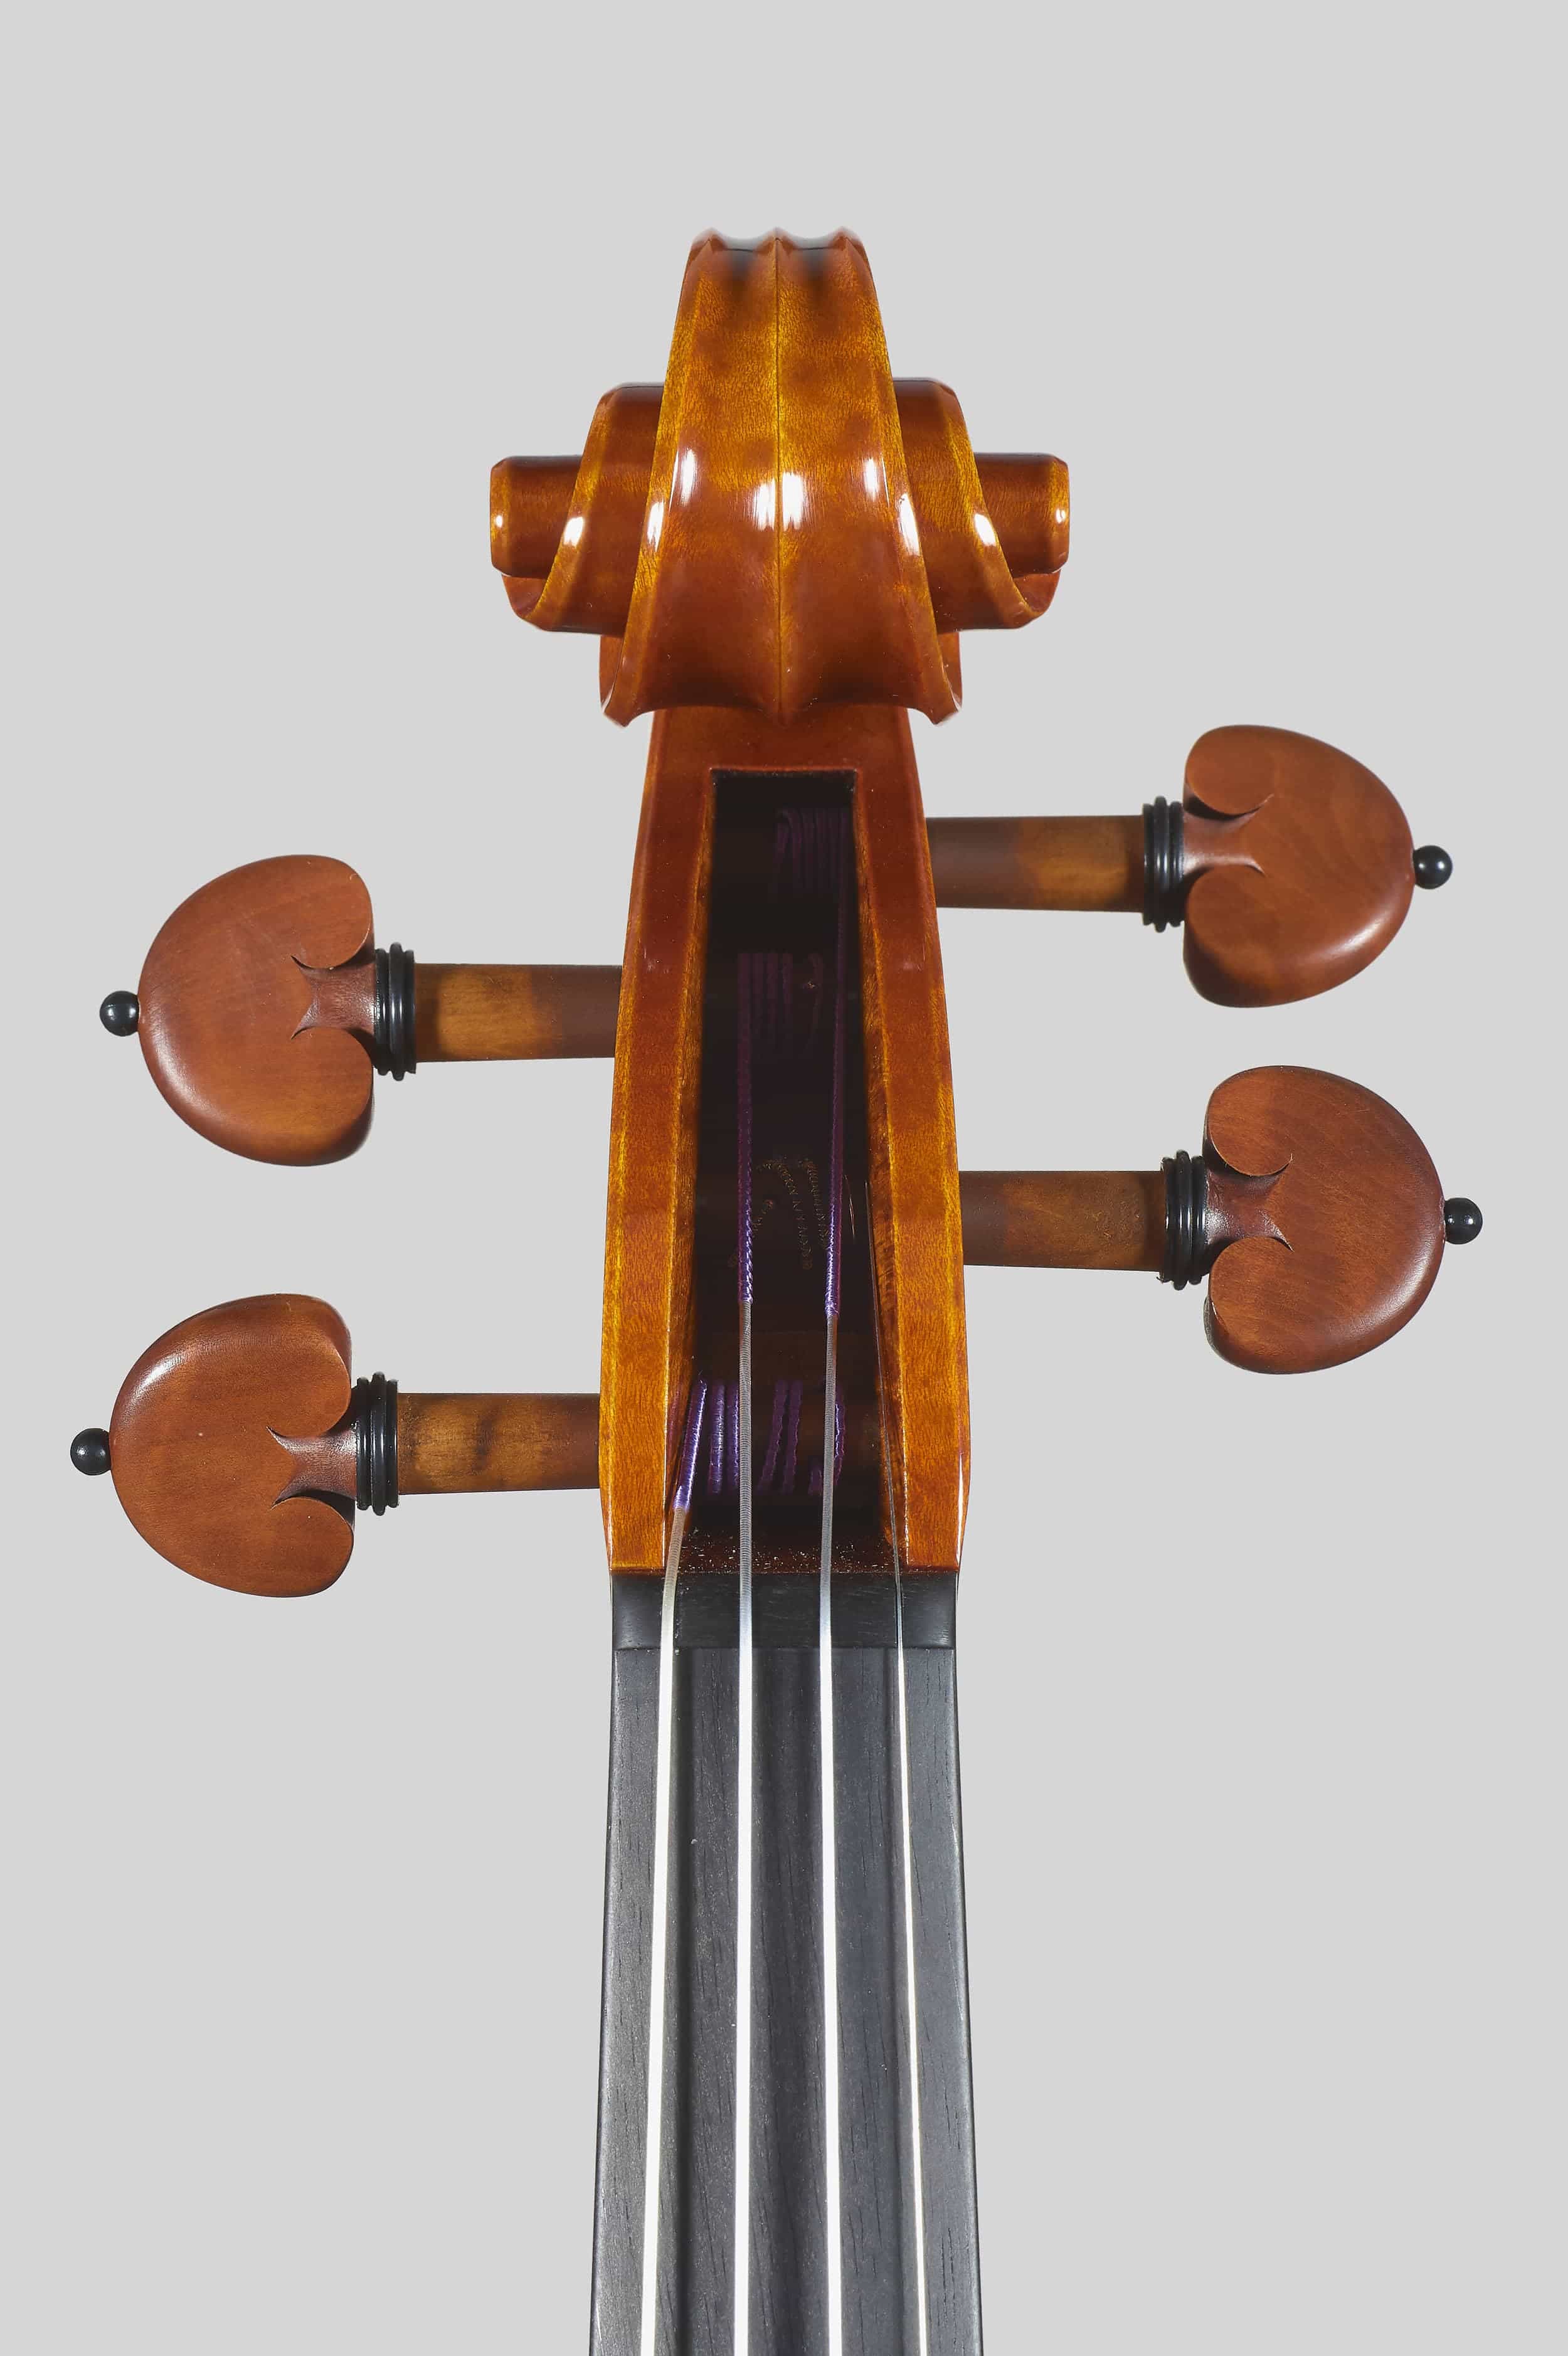 Anno 2017 - Violino modello stile A. Stradivari “Viotti” 1709 - Testa fronte